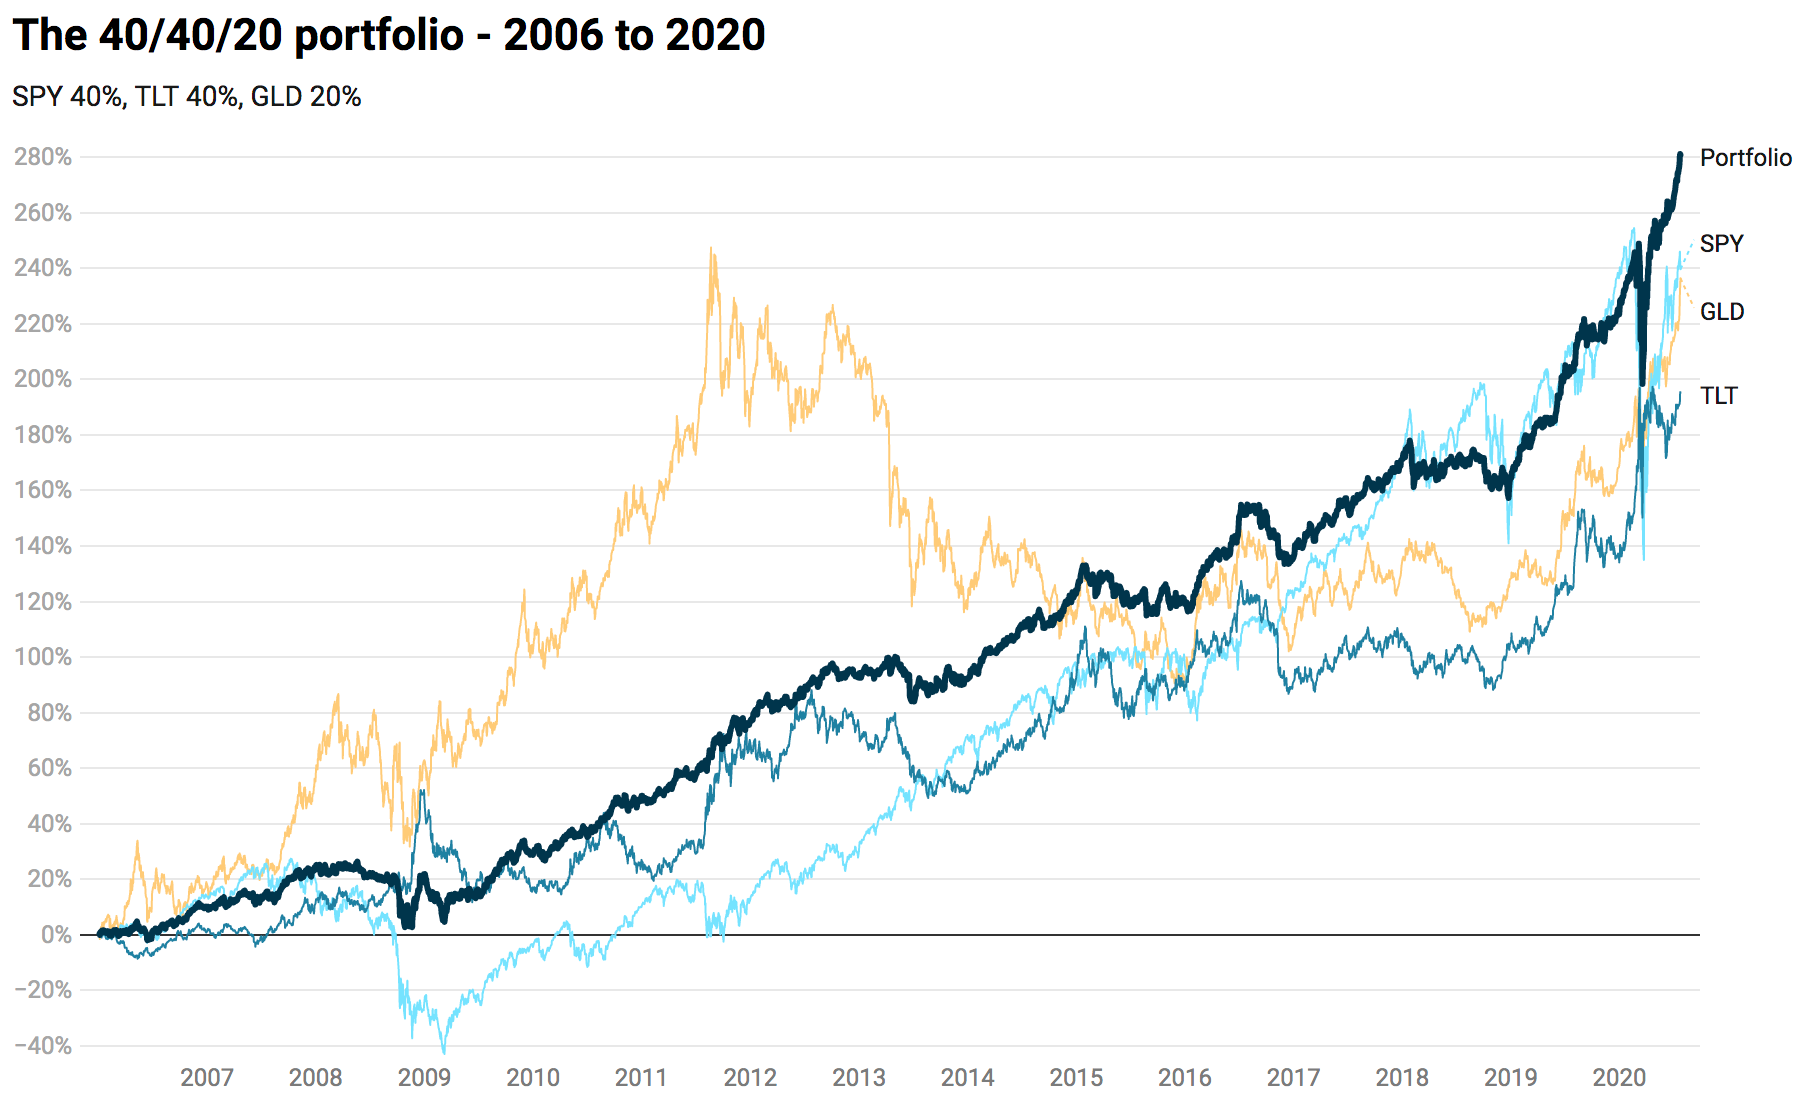 The 40/40/20 portfolio since 2006